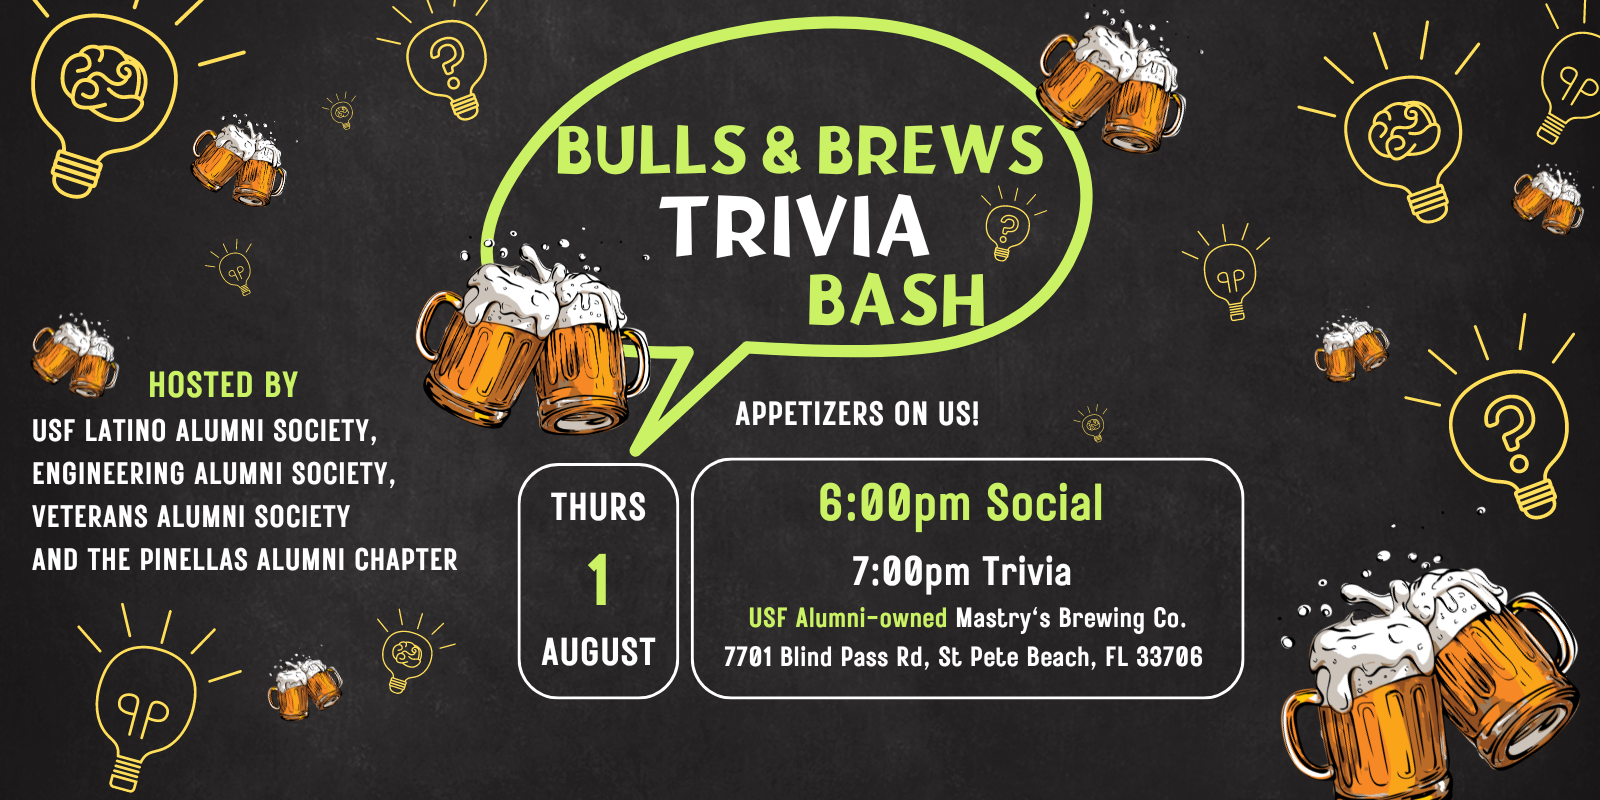 Bulls & Brews Trivia Bash